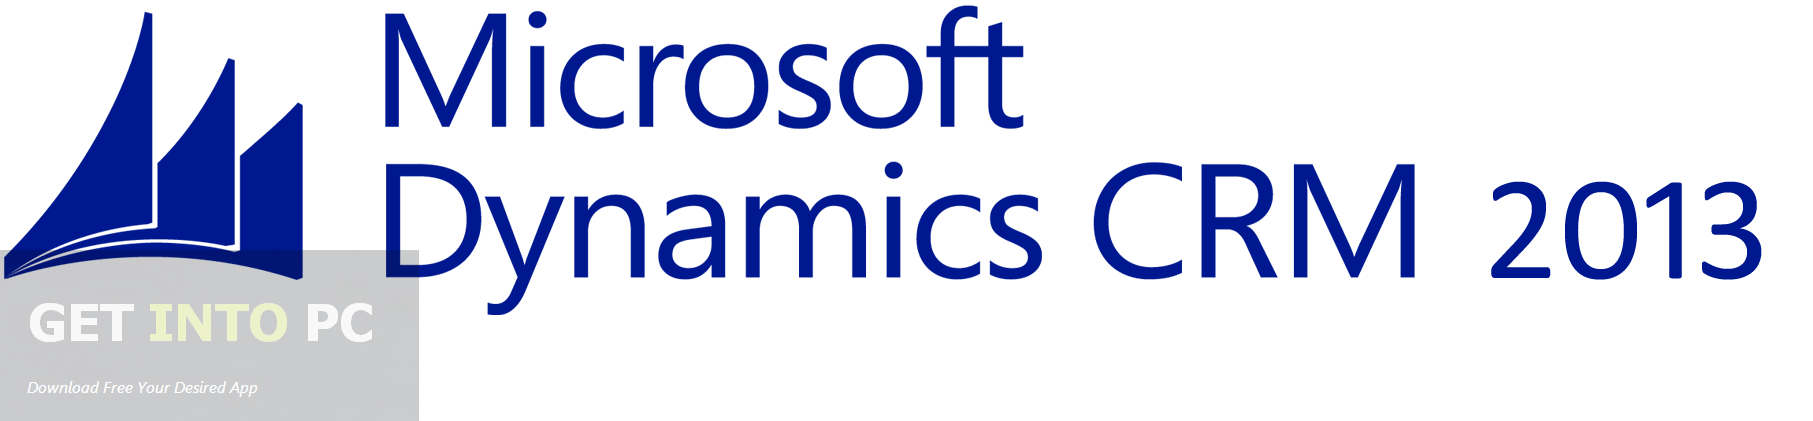 Microsoft Dynamics CRM 2013 Logo - Microsoft Dynamics CRM Server 2013 Free Download